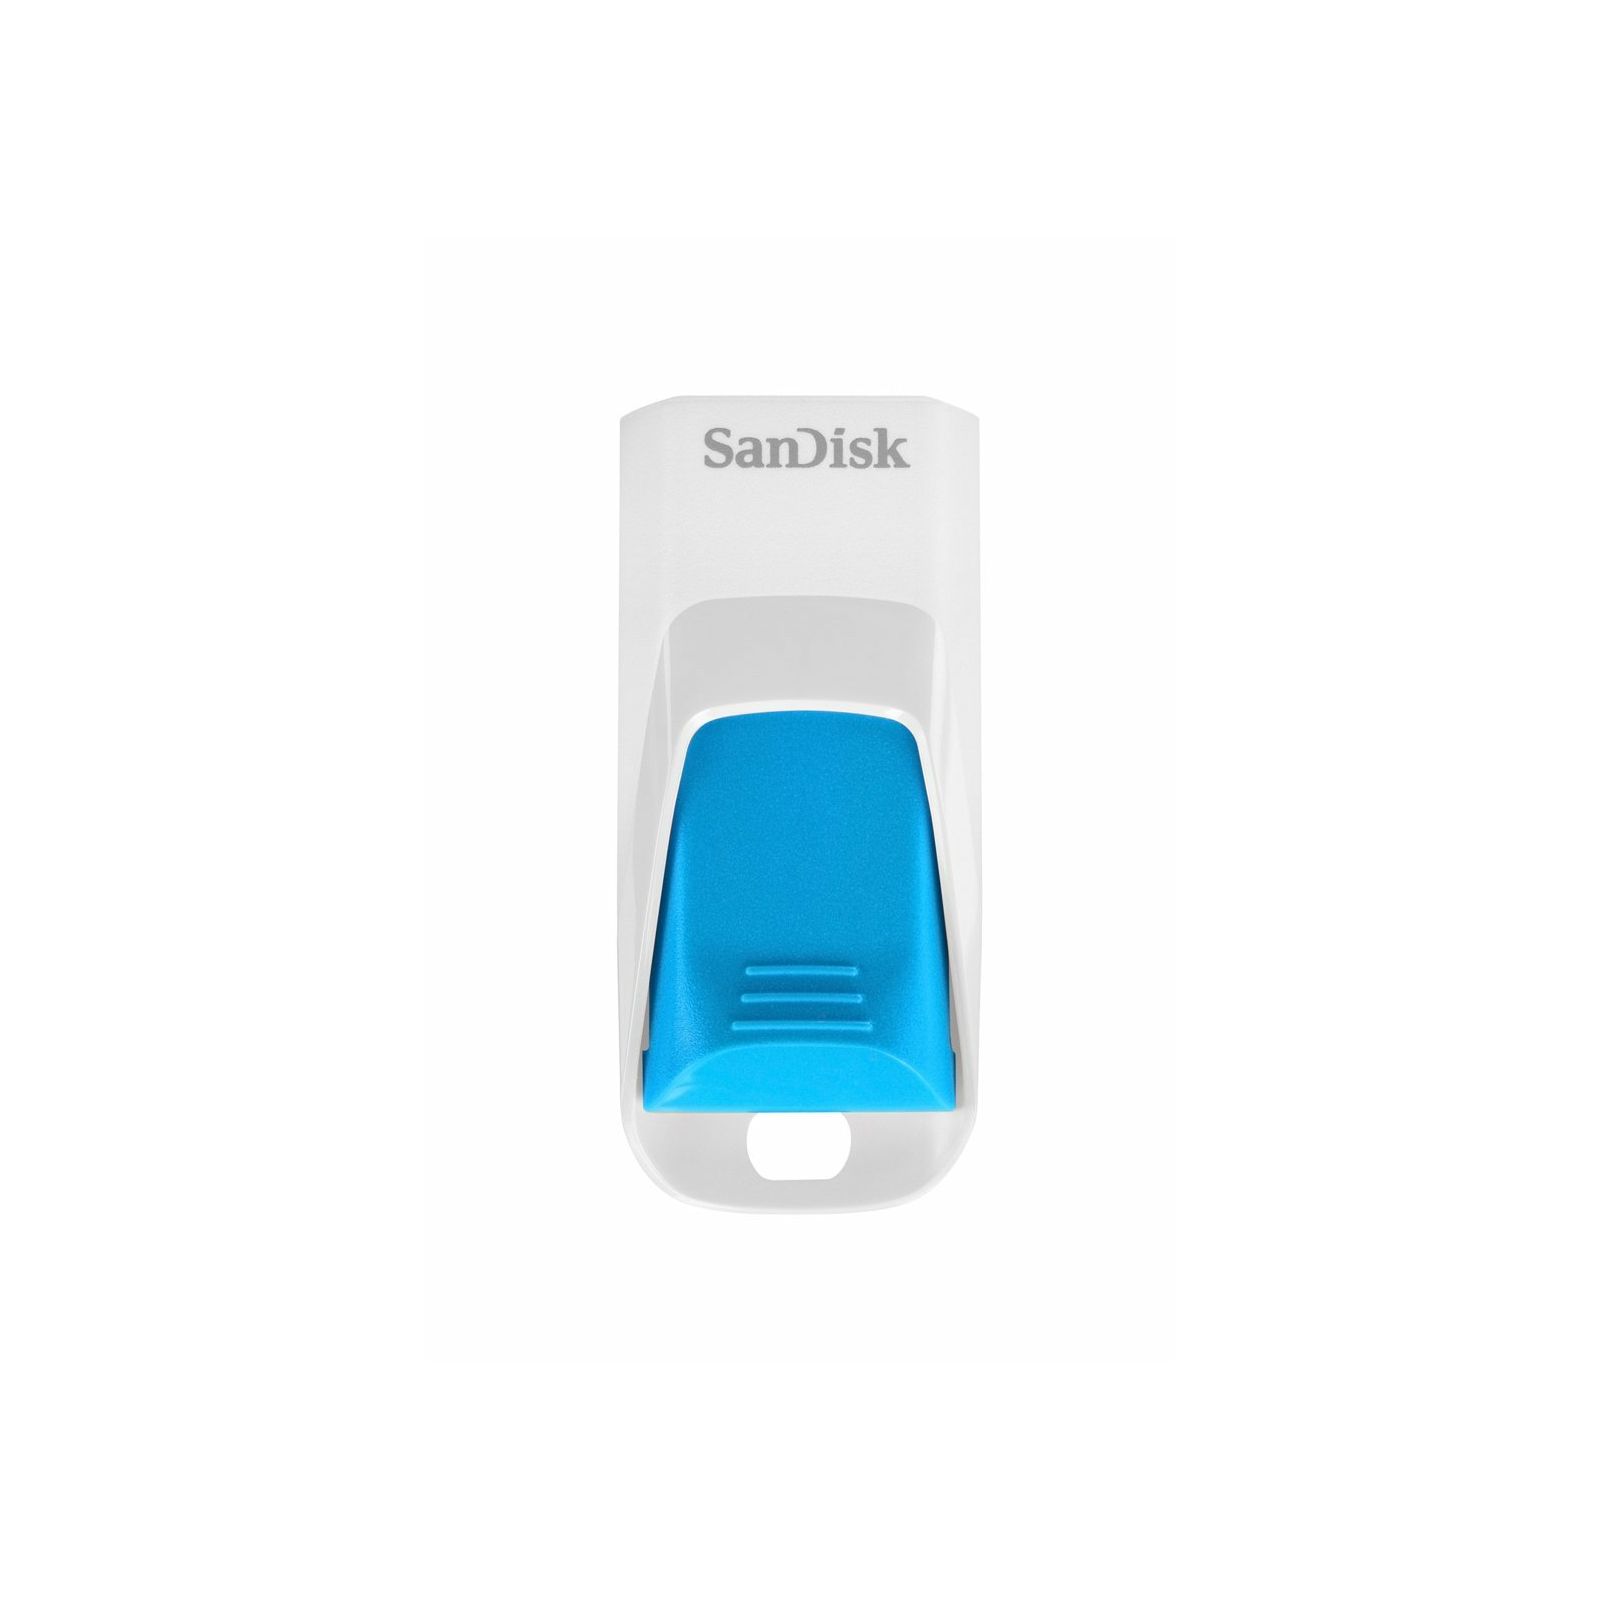 SanDisk Cruzer Edge 16GB White/Blue SDCZ51W-016G-B35B USB Memory Stick